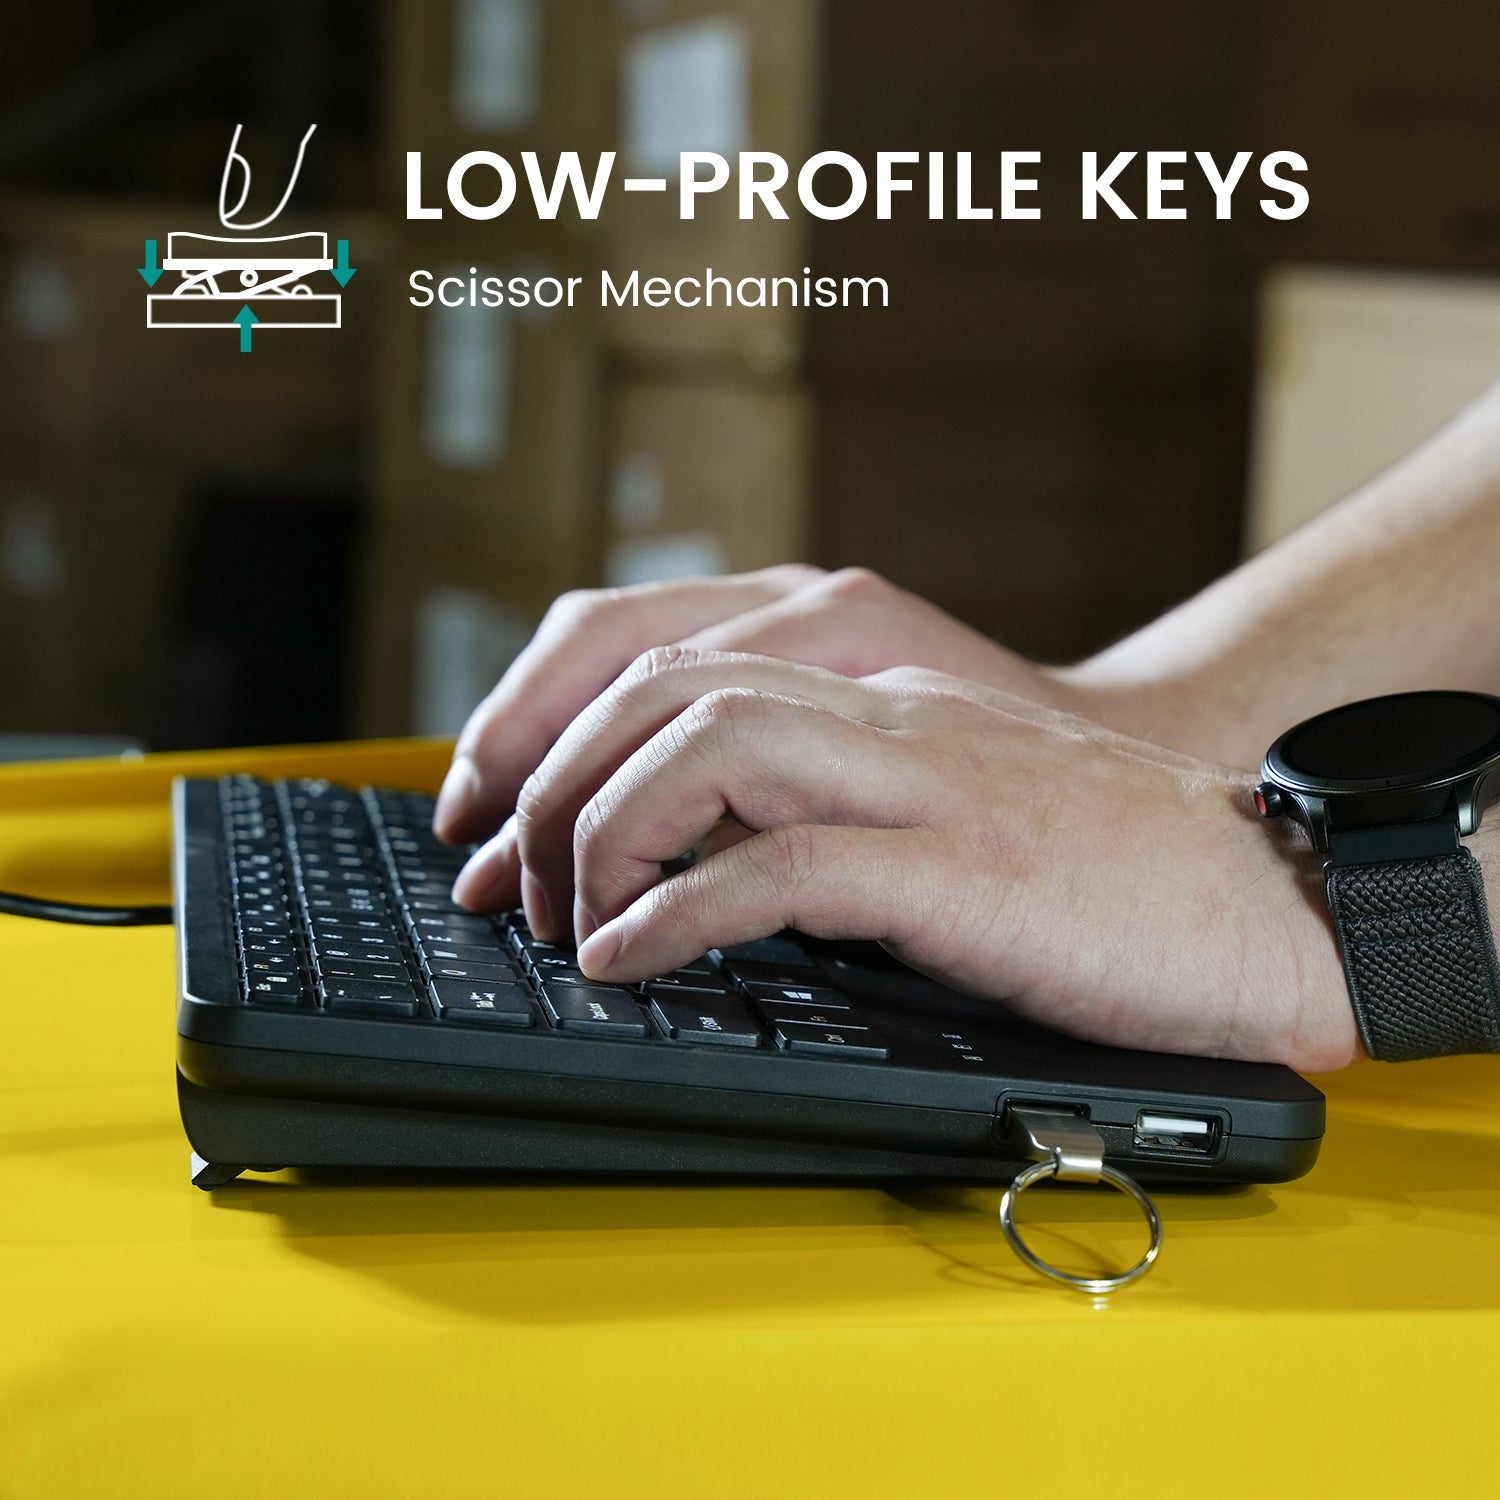 PERIBOARD-525 - Wired Mini USB Keyboard with Touchpad - Scissor Keys - Build-in 2 USB Ports - Perixx Europe